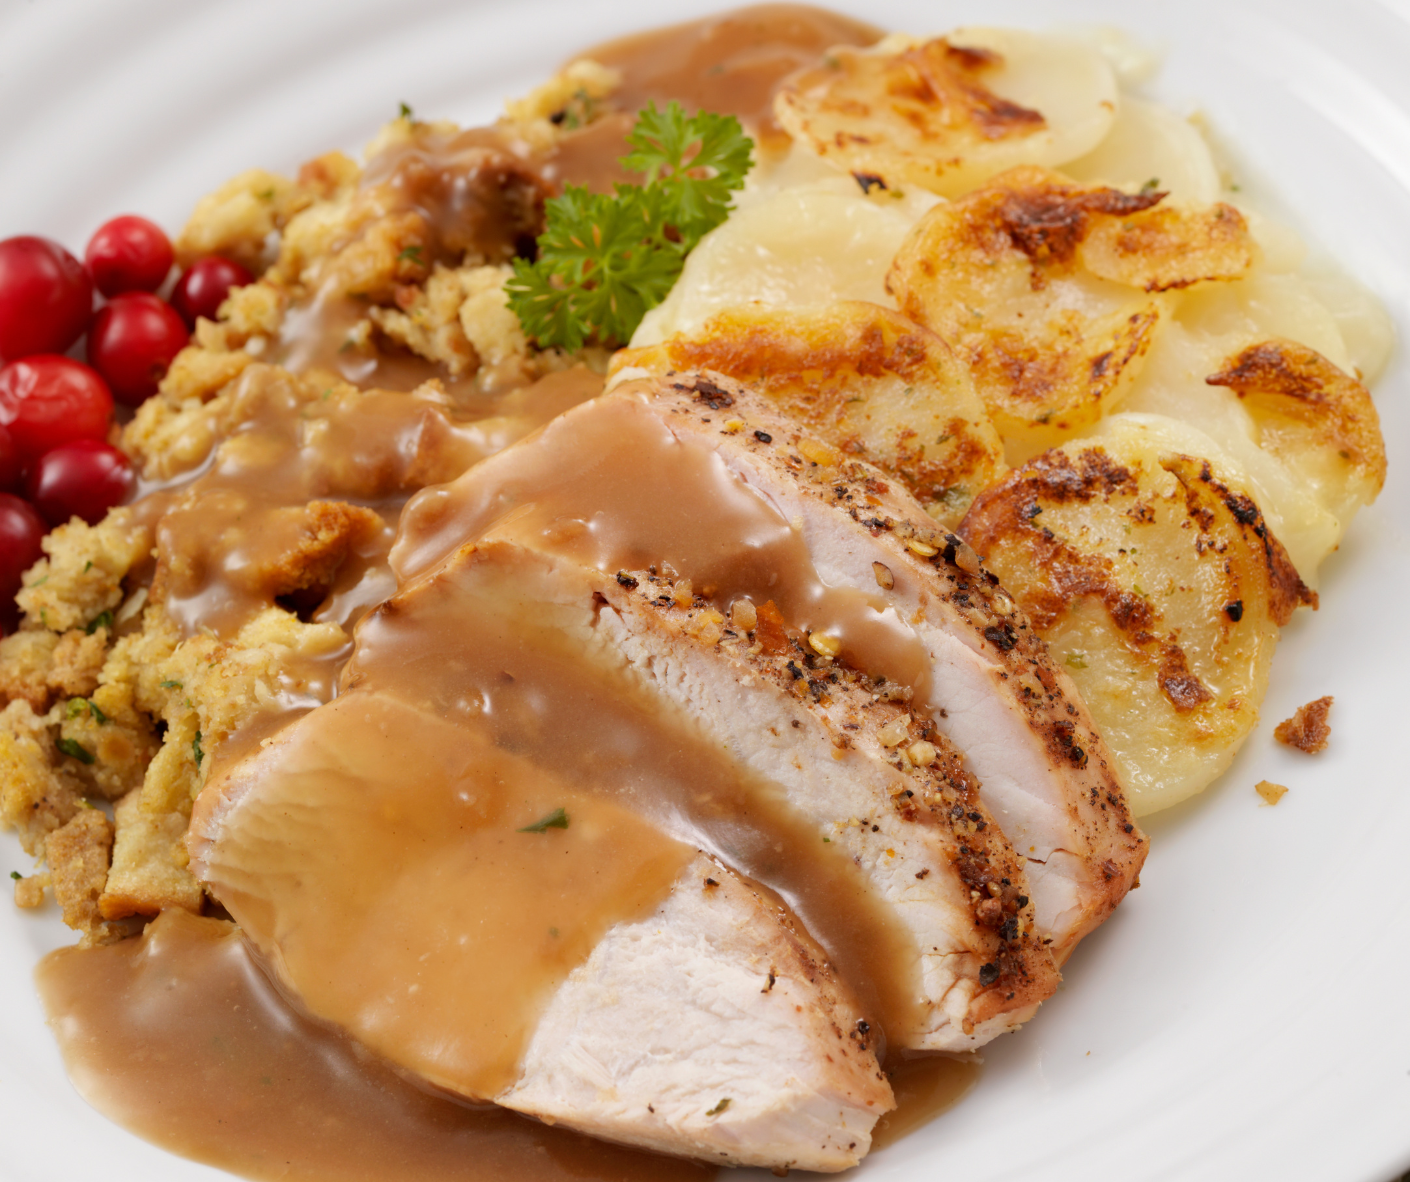 Dinner plate with turkey, stuffing, gravy.